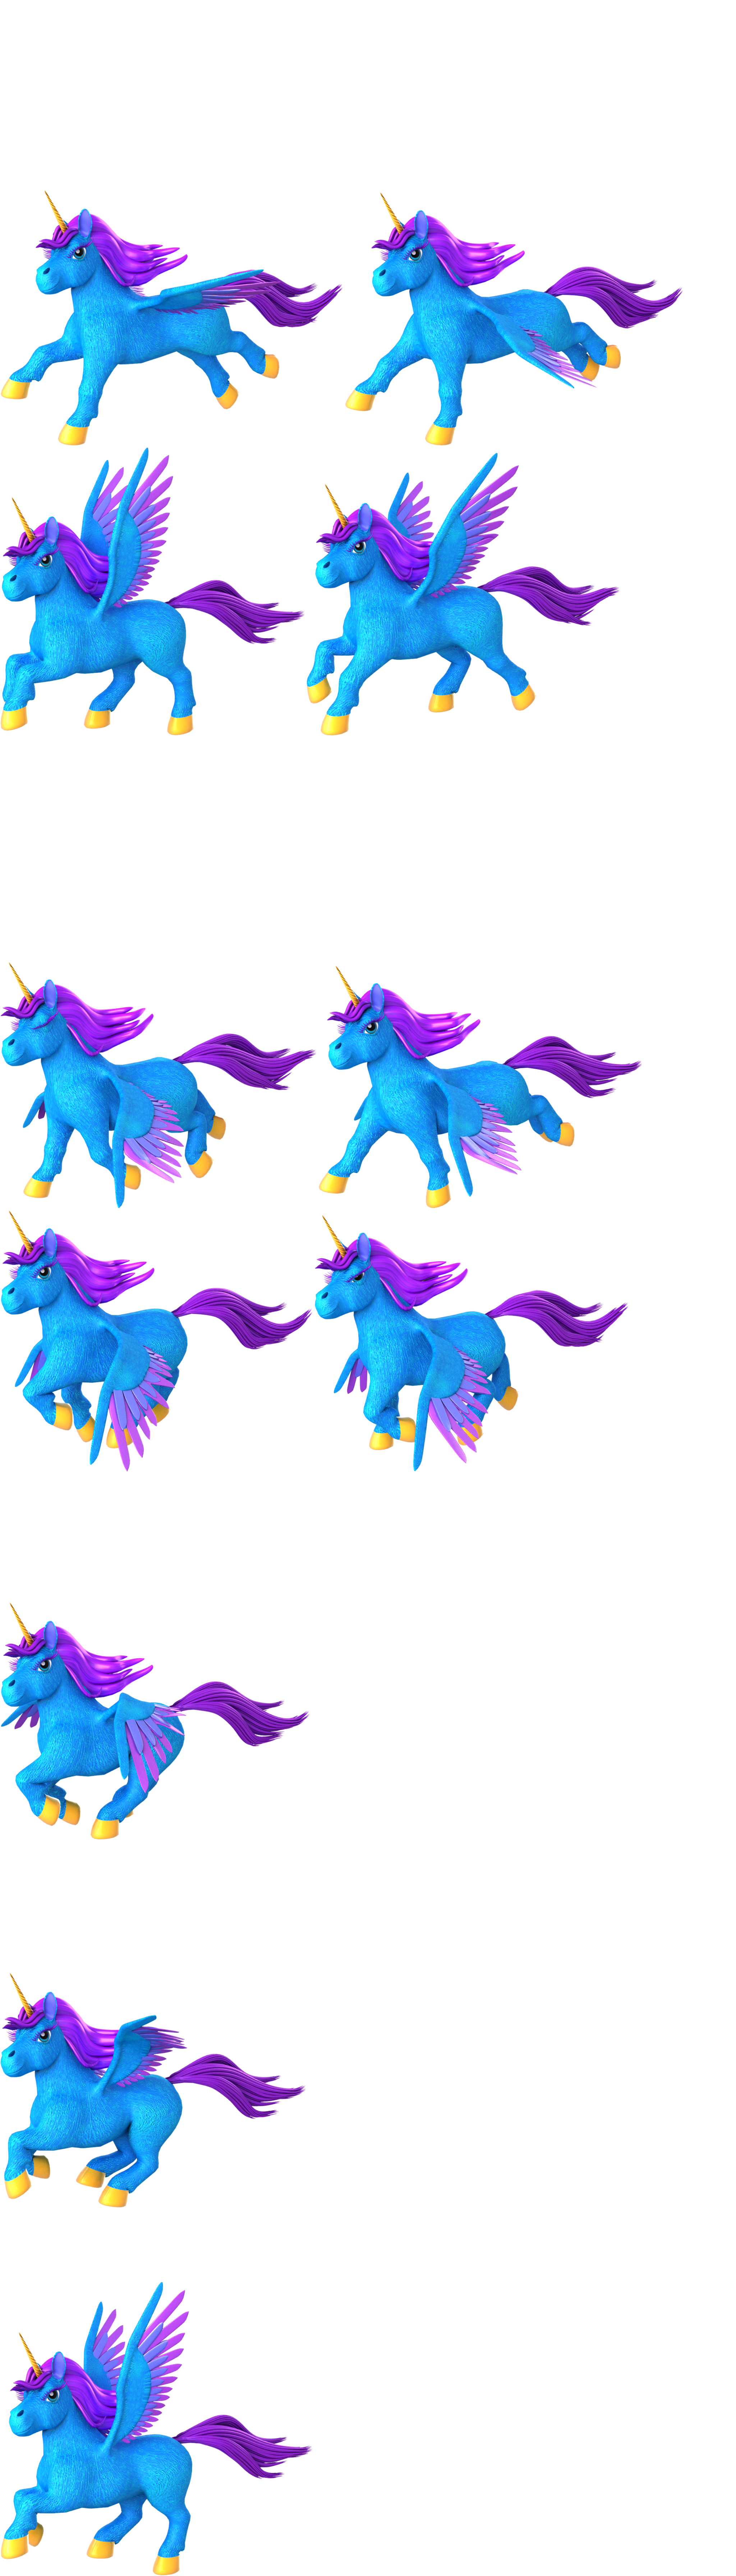 KID PIX 5: The STEAM Edition - Flying Unicorn